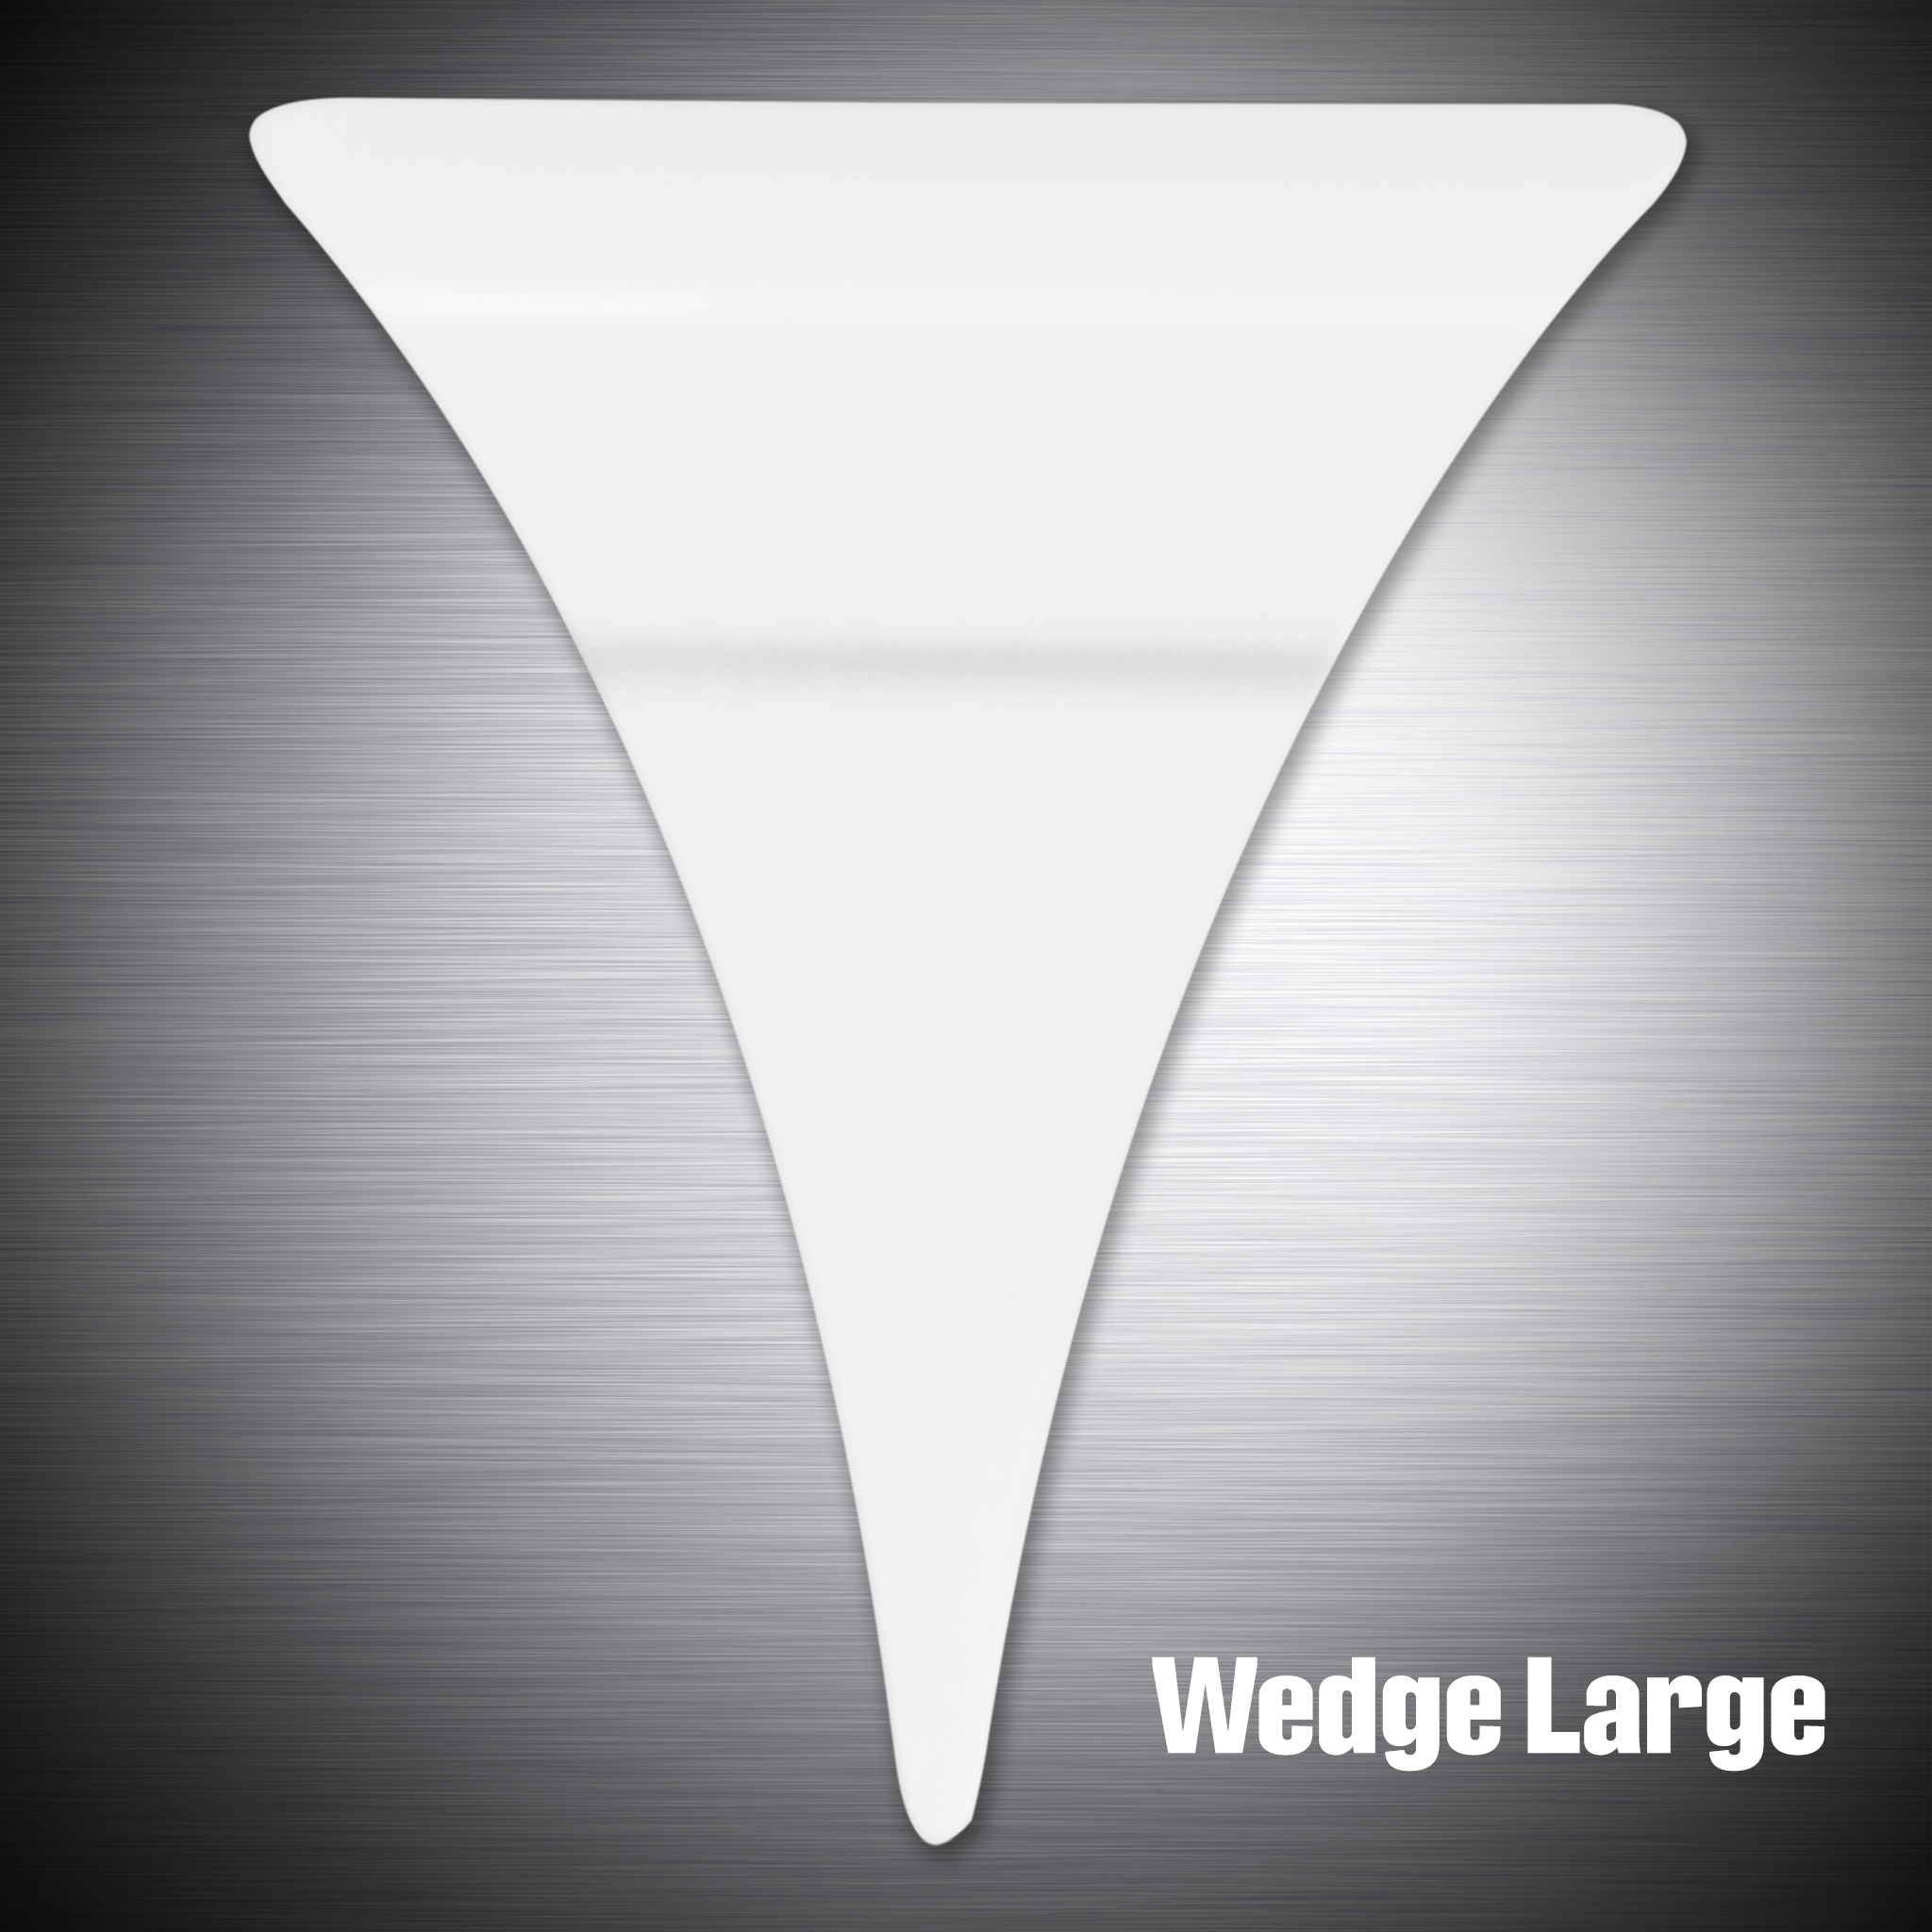 Wedge Large